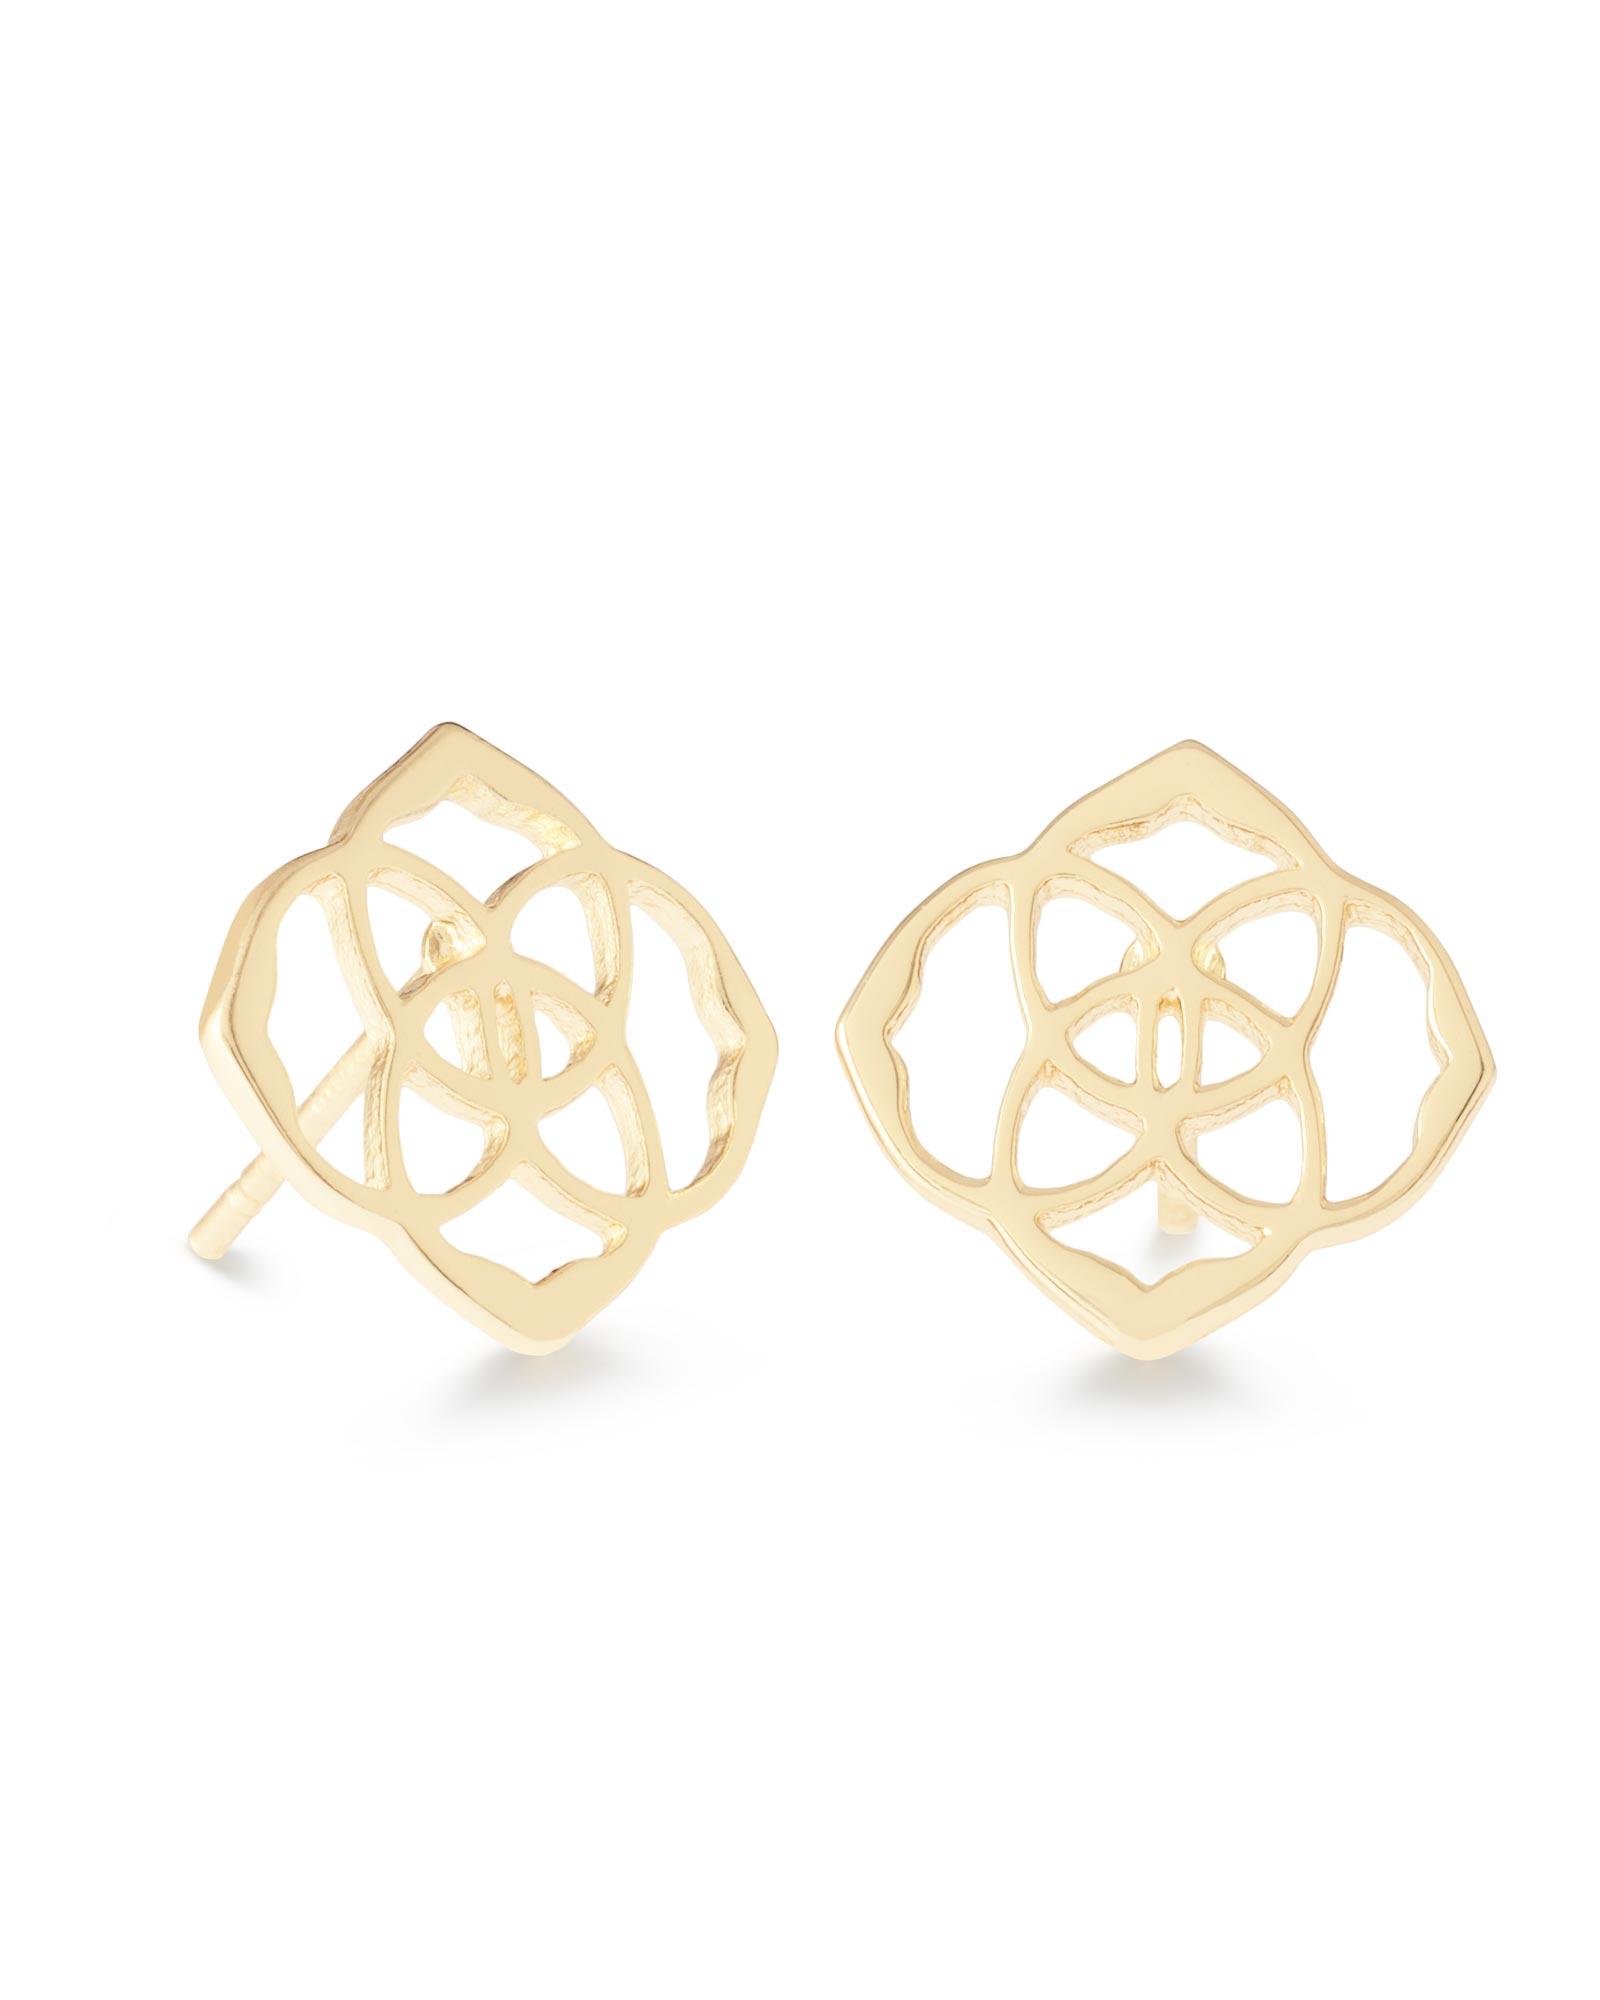 Kendra Scott Logo - Dira Stud Earrings in Gold Filigree. Kendra Scott Jewelry